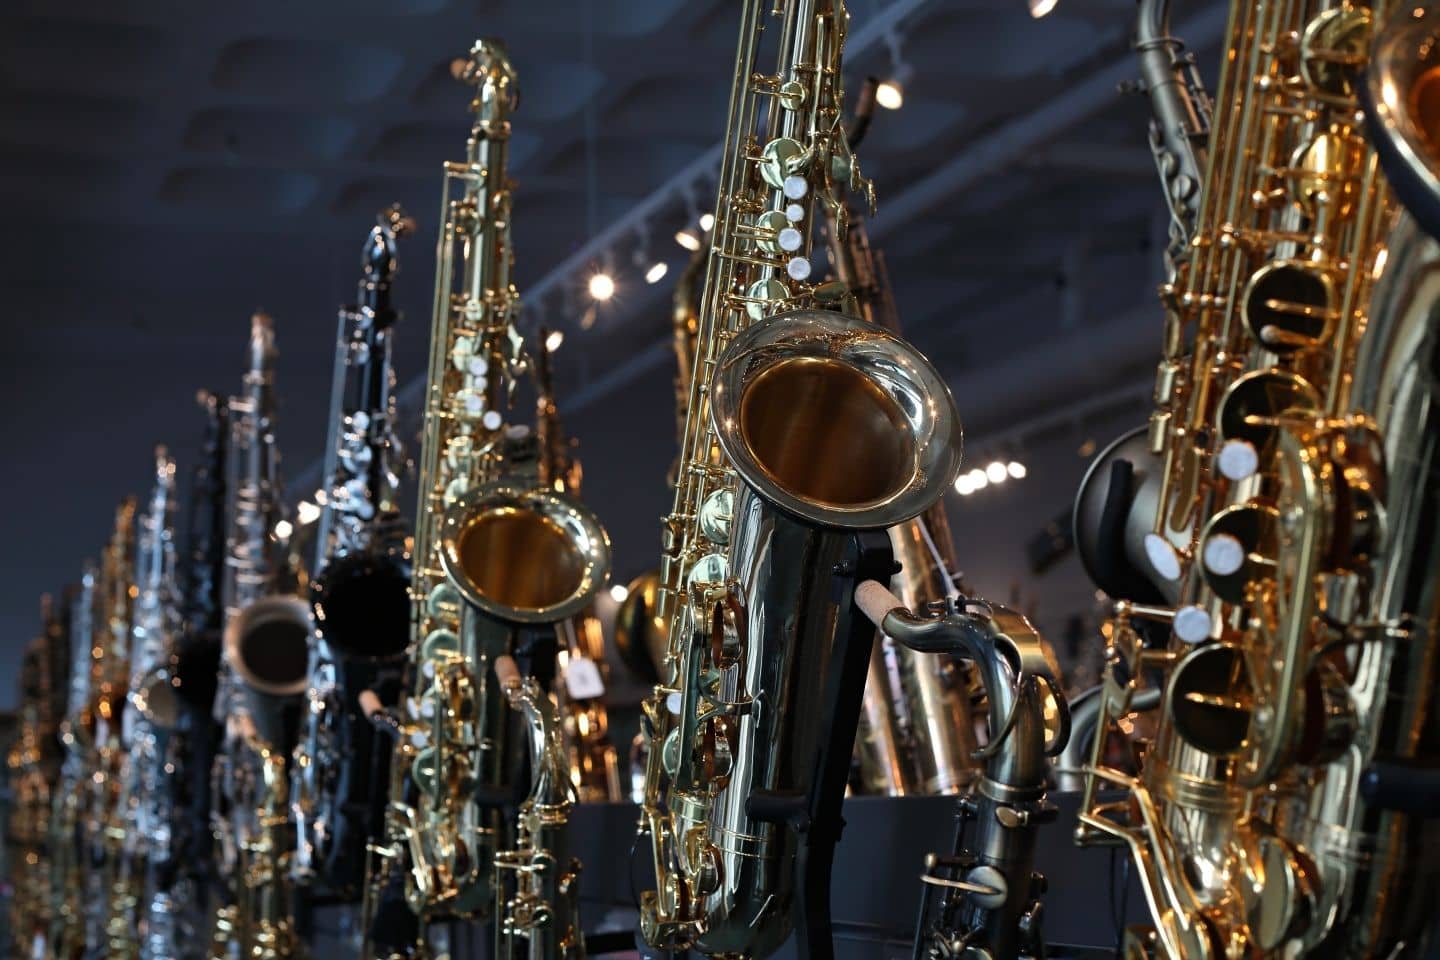 Saxophones d'occasion en exposition